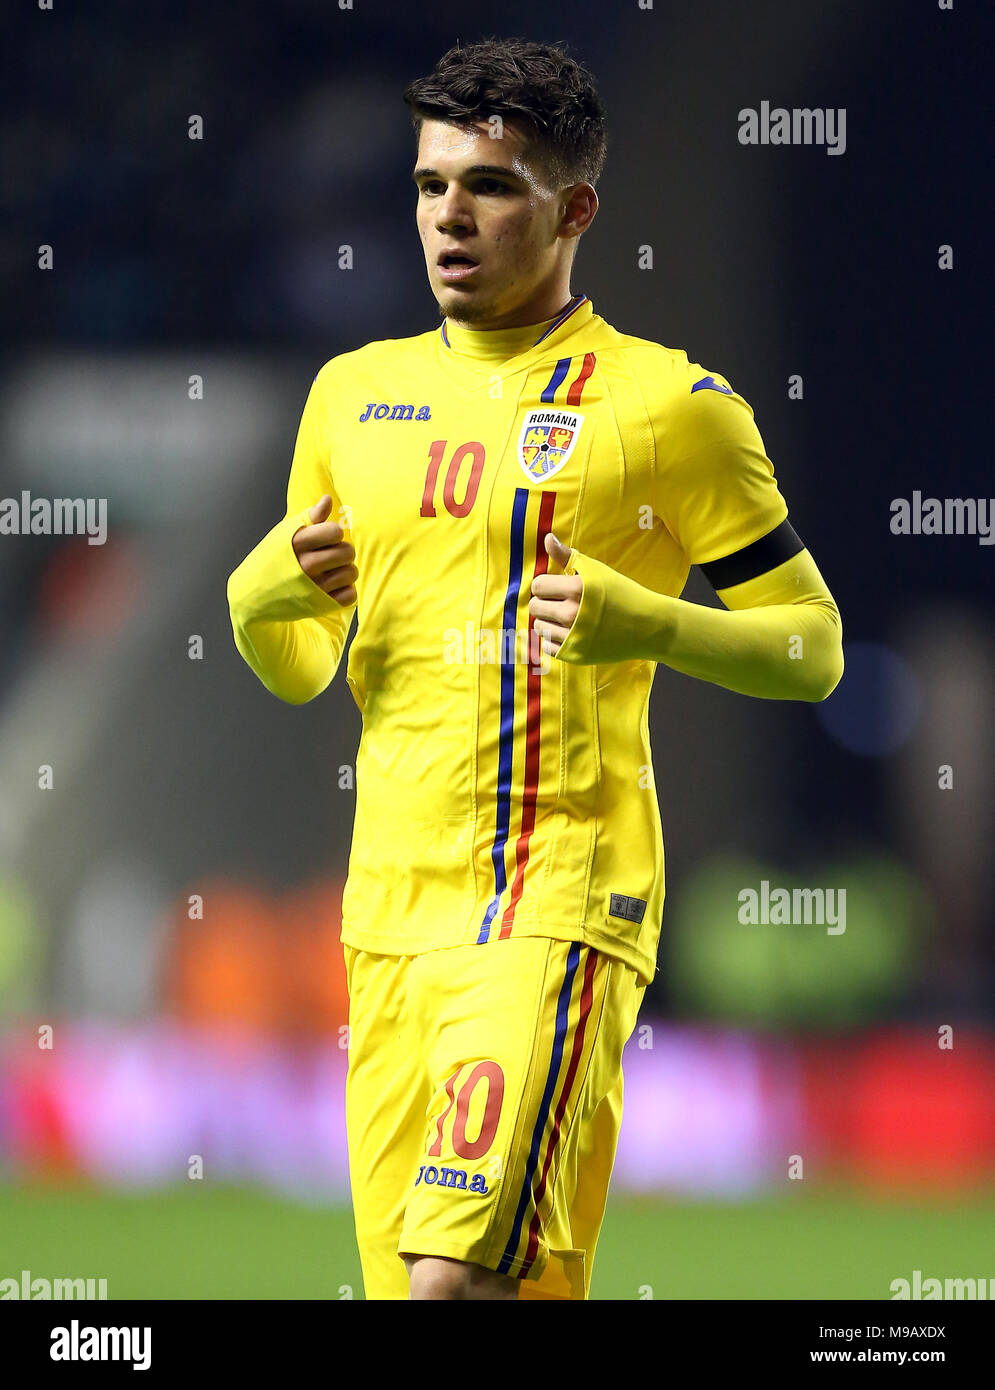 Romanian Soccer Player Ianis Hagi Editorial Photography - Image of